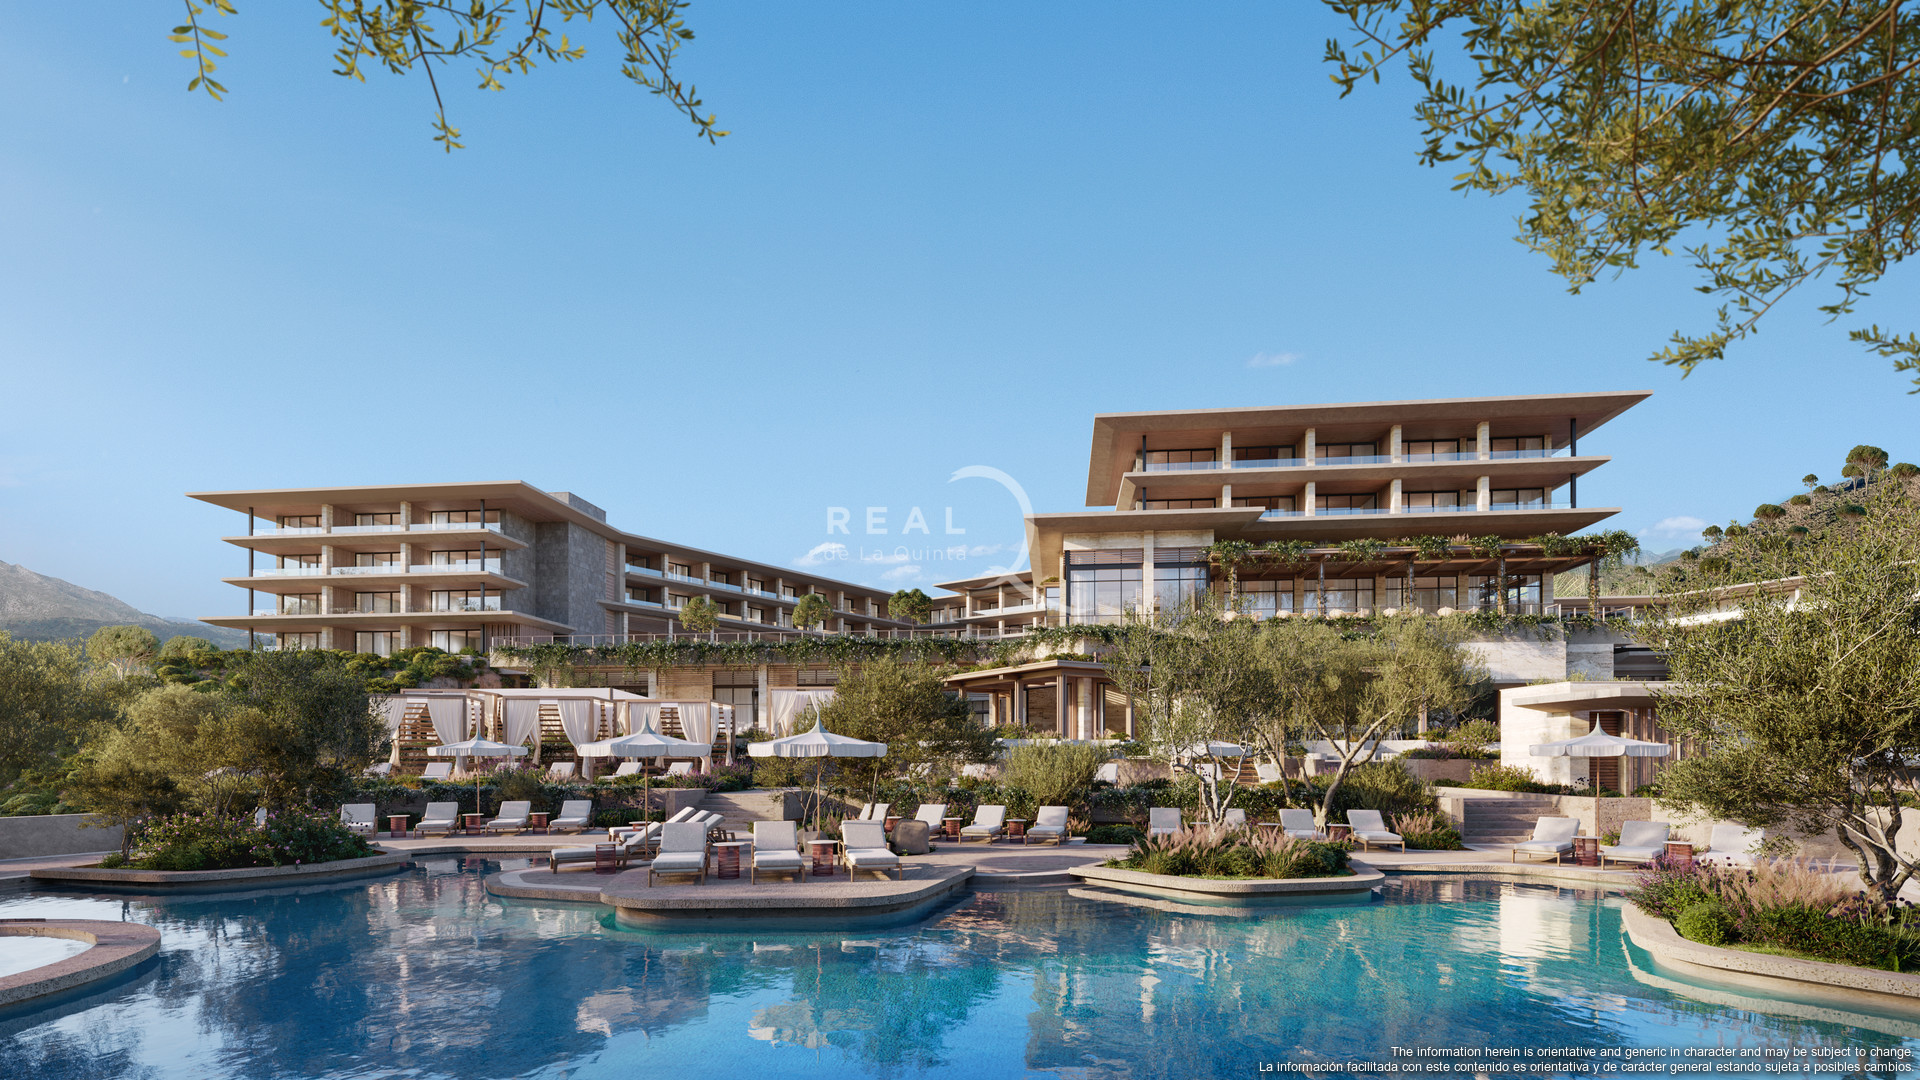 Angsana Real de La Quinta Hotel By Banyan Tree Group - View from Family Pool (Garden Level)